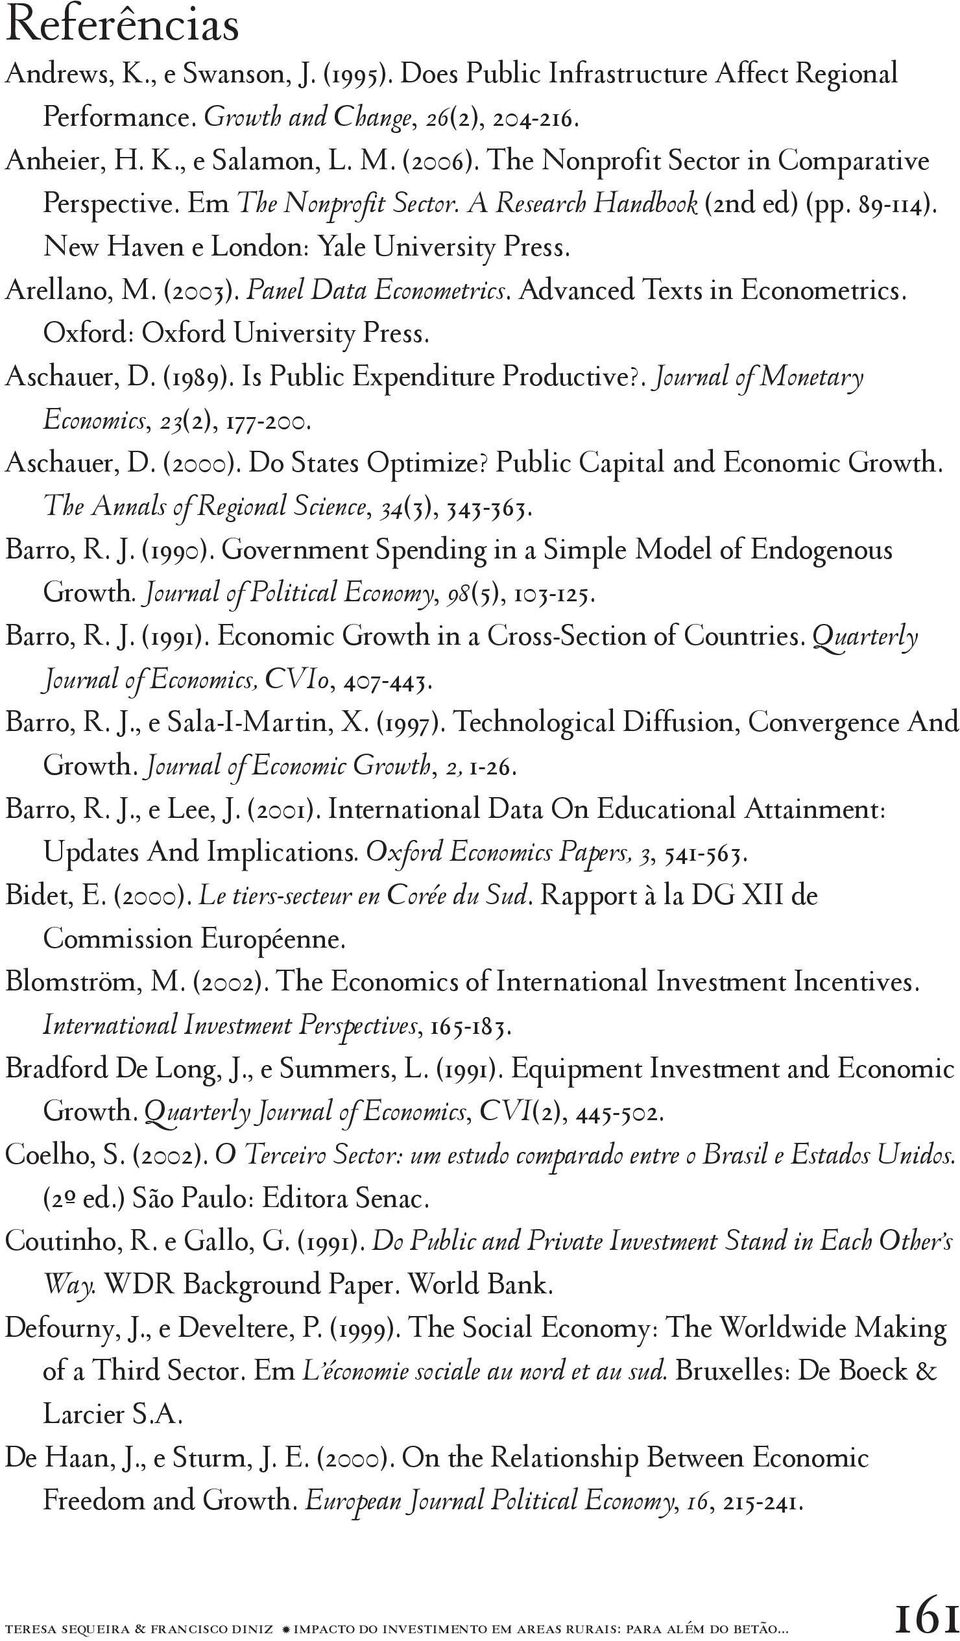 Panel Data Econometrics. Advanced Texts in Econometrics. Oxford: Oxford University Press. Aschauer, D. (1989). Is Public Expenditure Productive?. Journal of Monetary Economics, 23(2), 177-200.